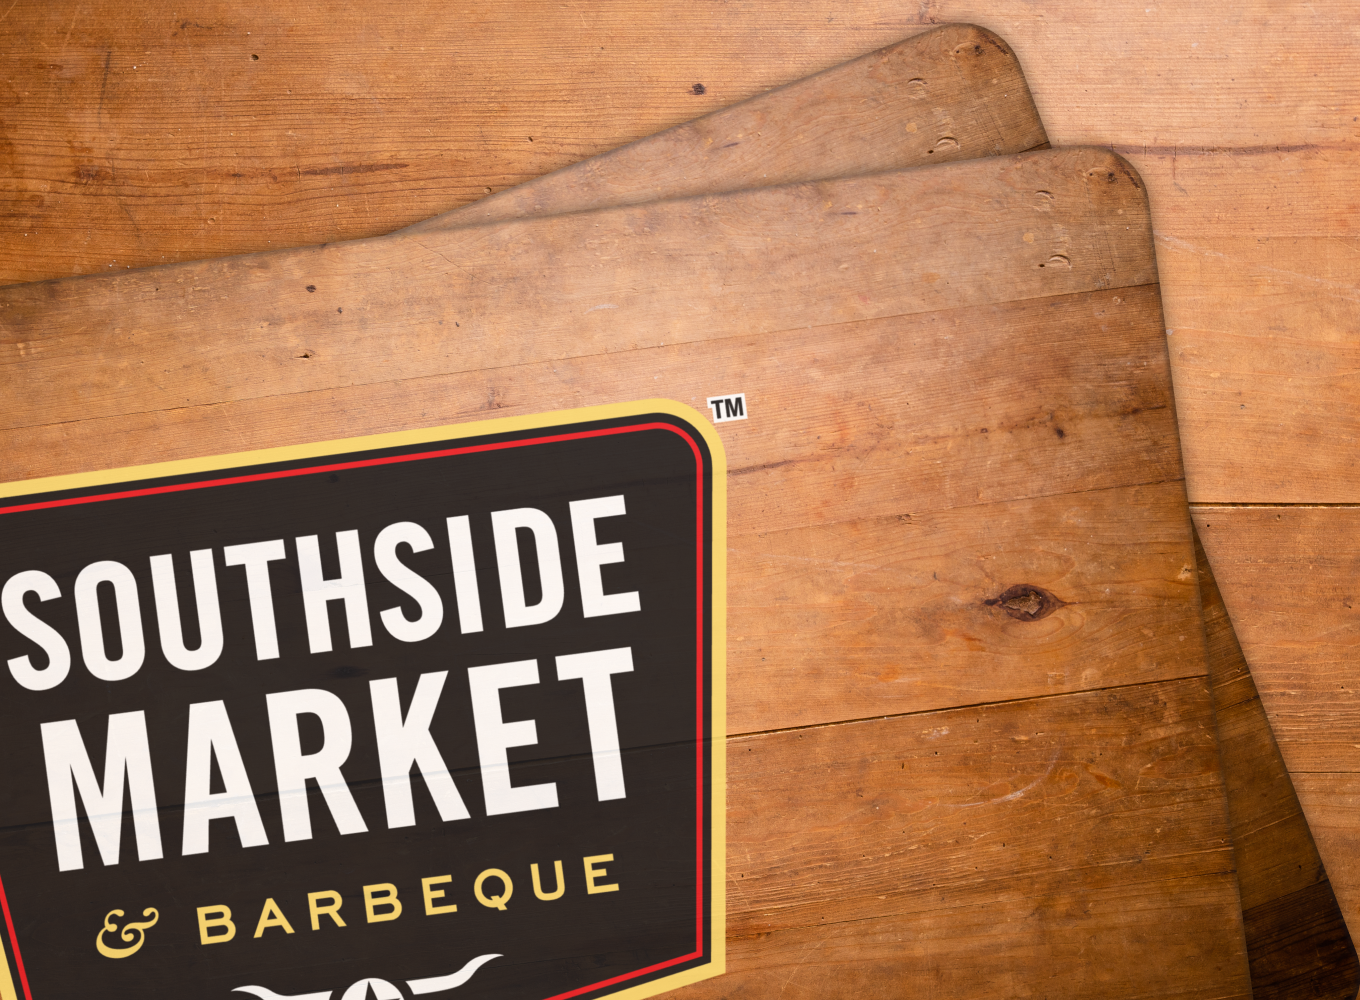 Oak Smoked Black Pepper, Coarse Ground – Southside Market & Barbeque